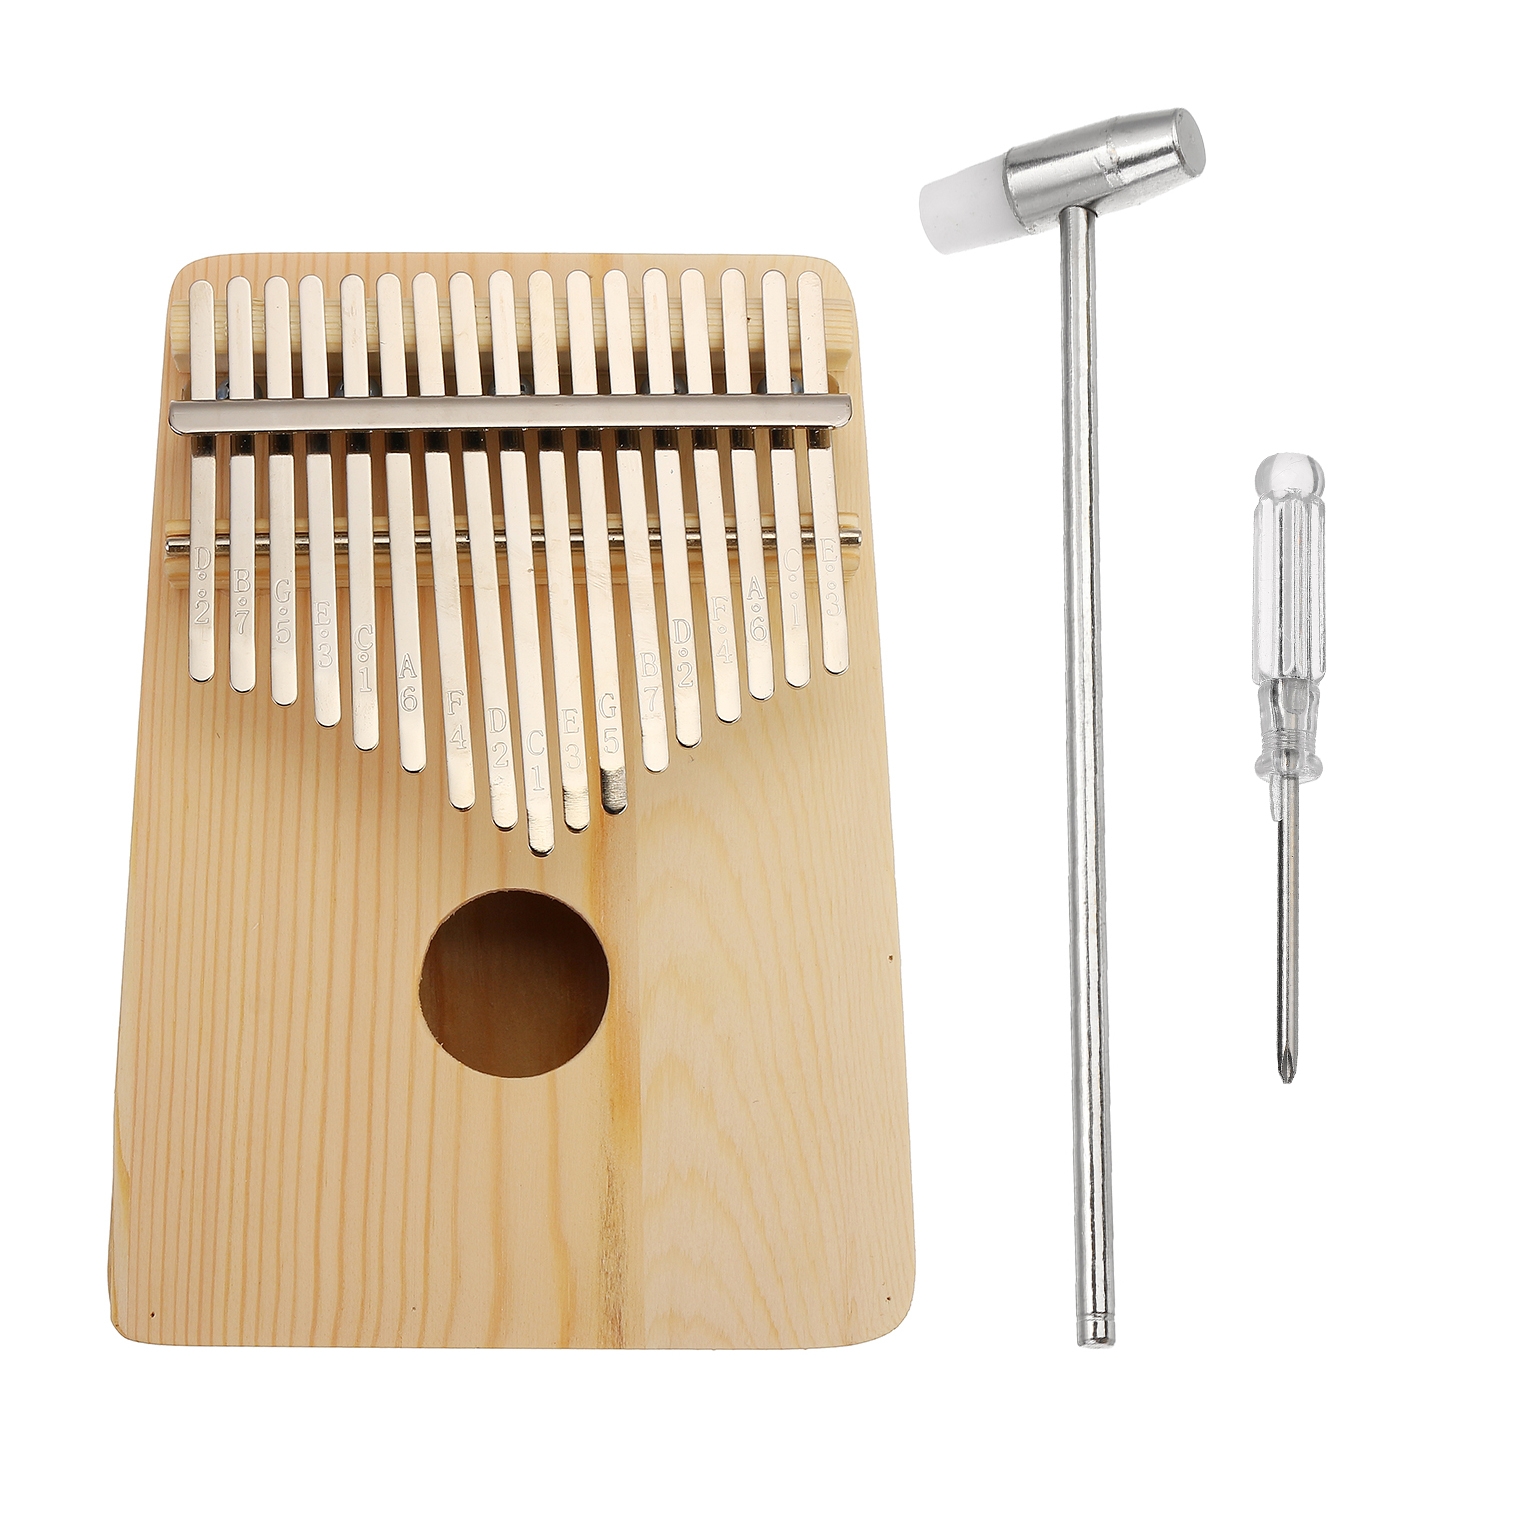 17 Key Kalimba Wood Thumb Piano Finger Keyboard Instrument w/Tuning Hammer Gift